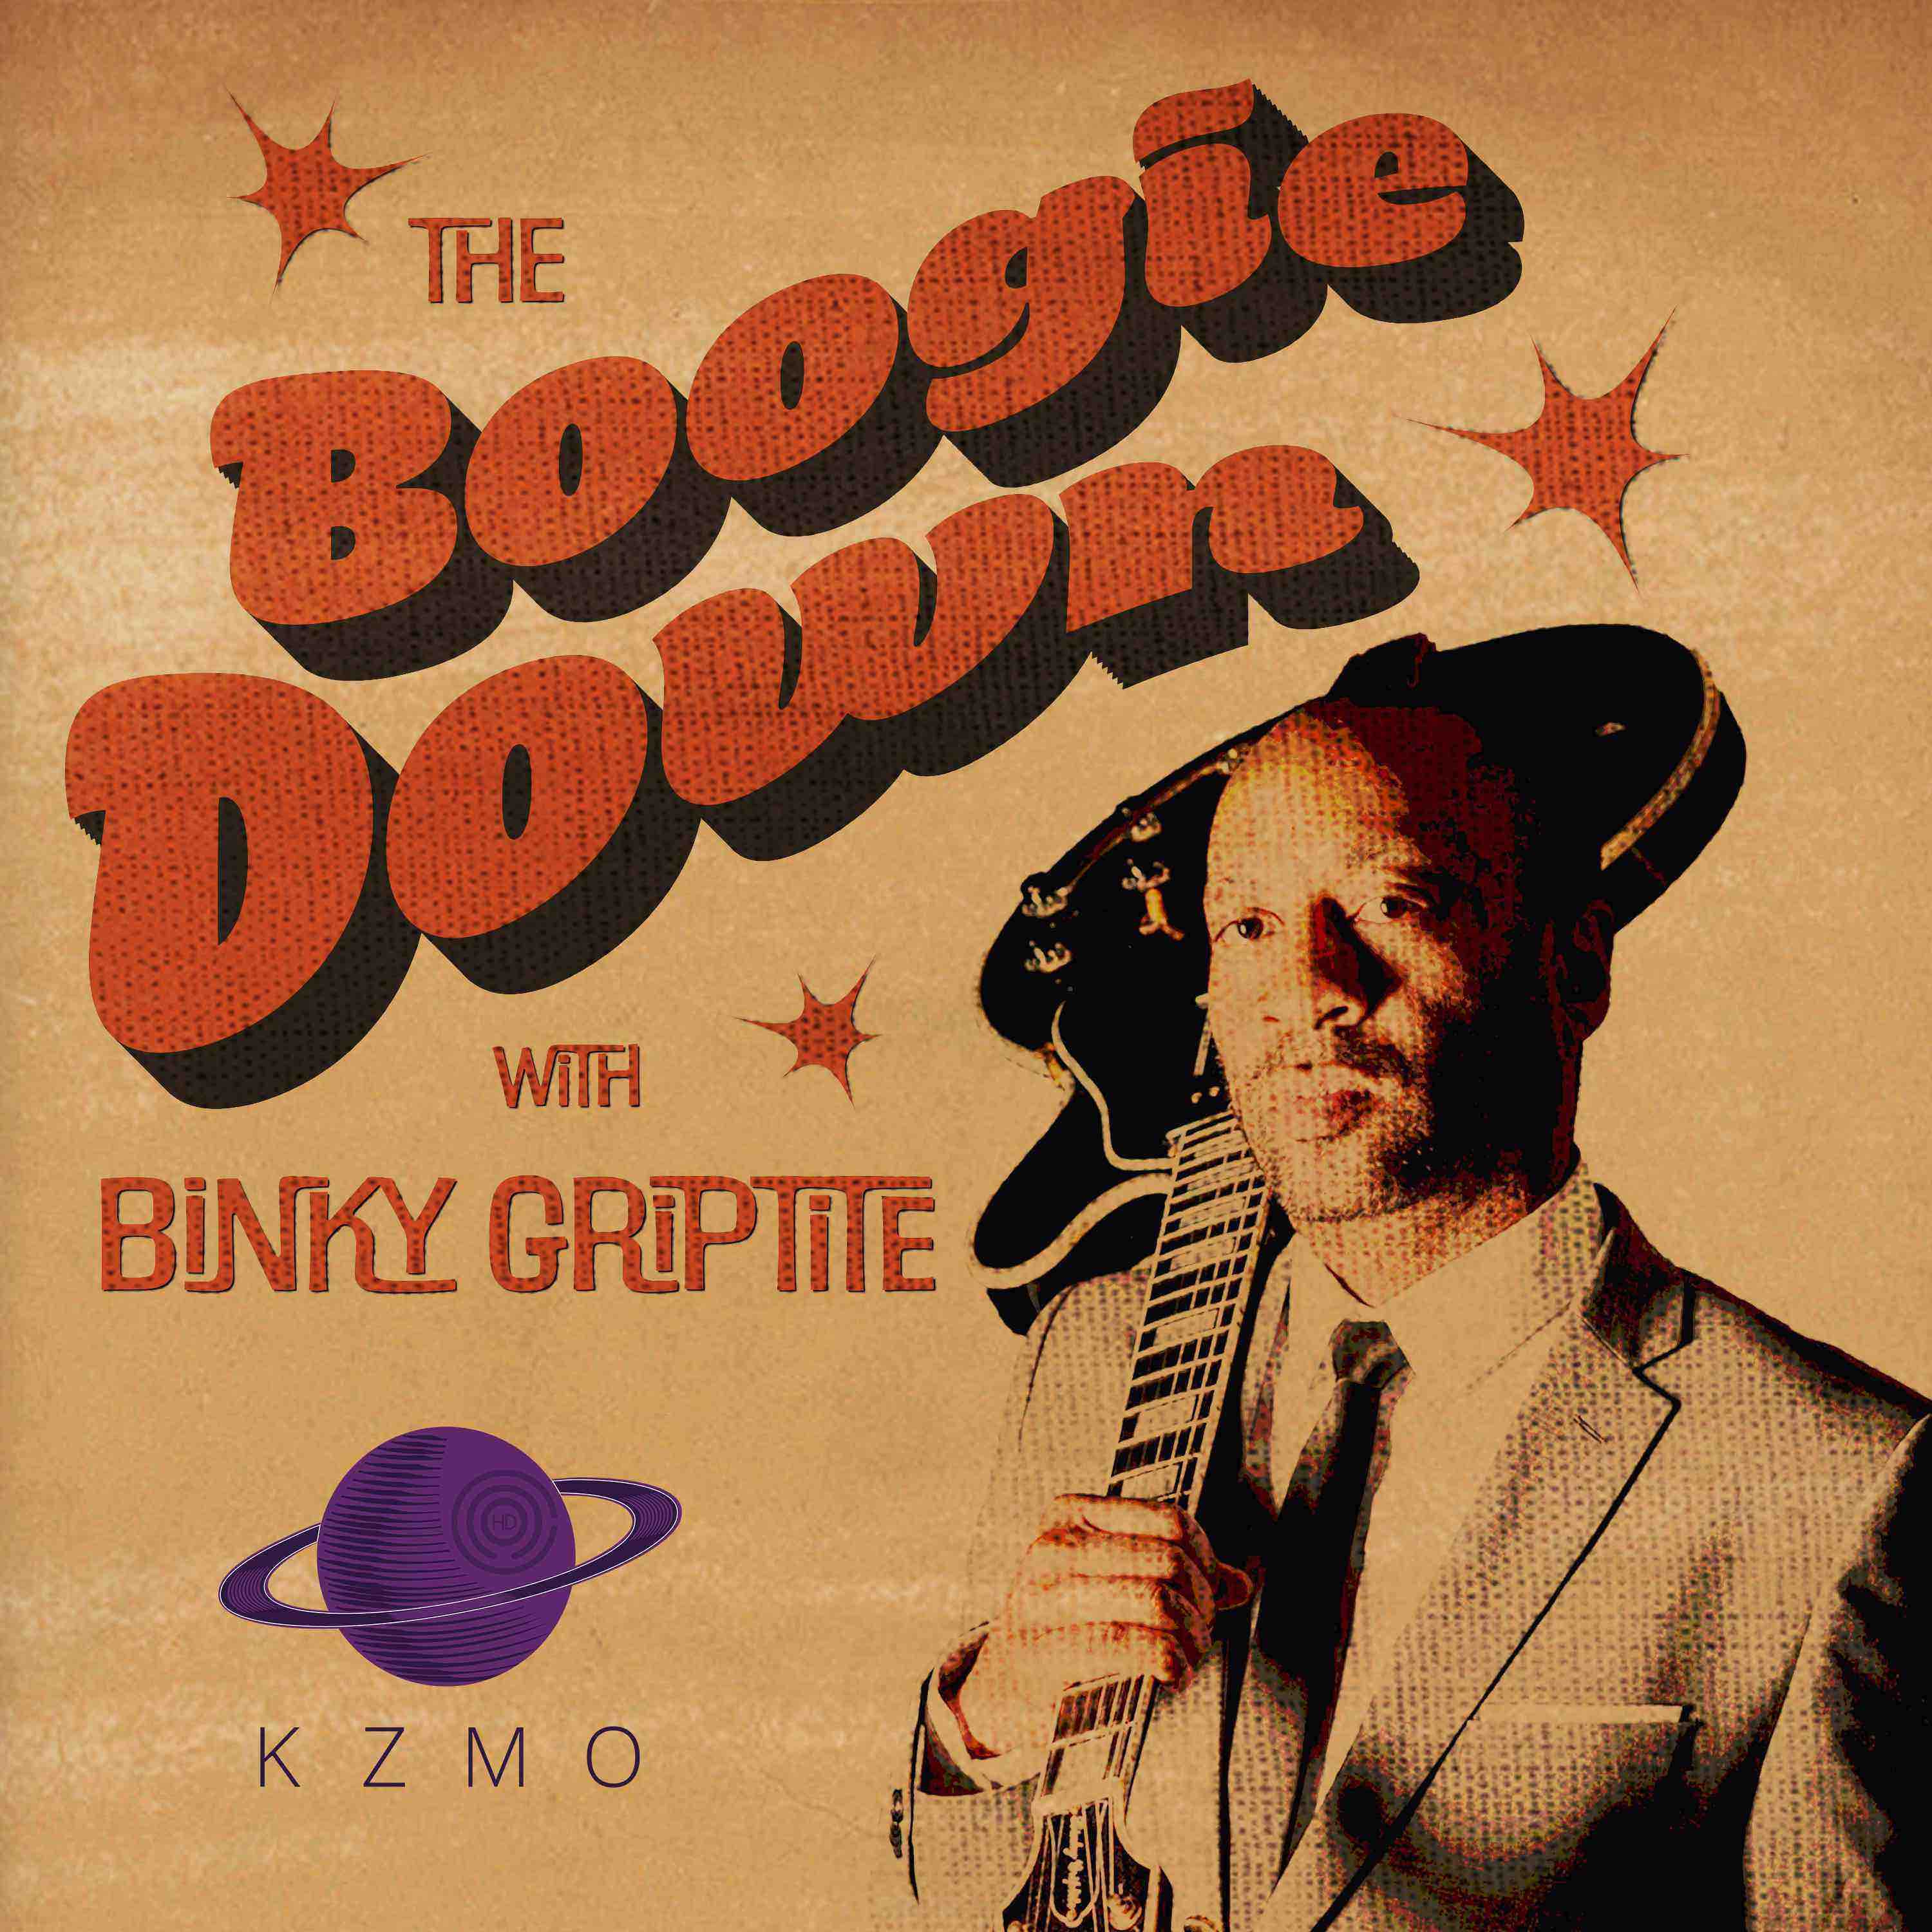 The Boogie Down with Binky Griptite (KZMO HD)